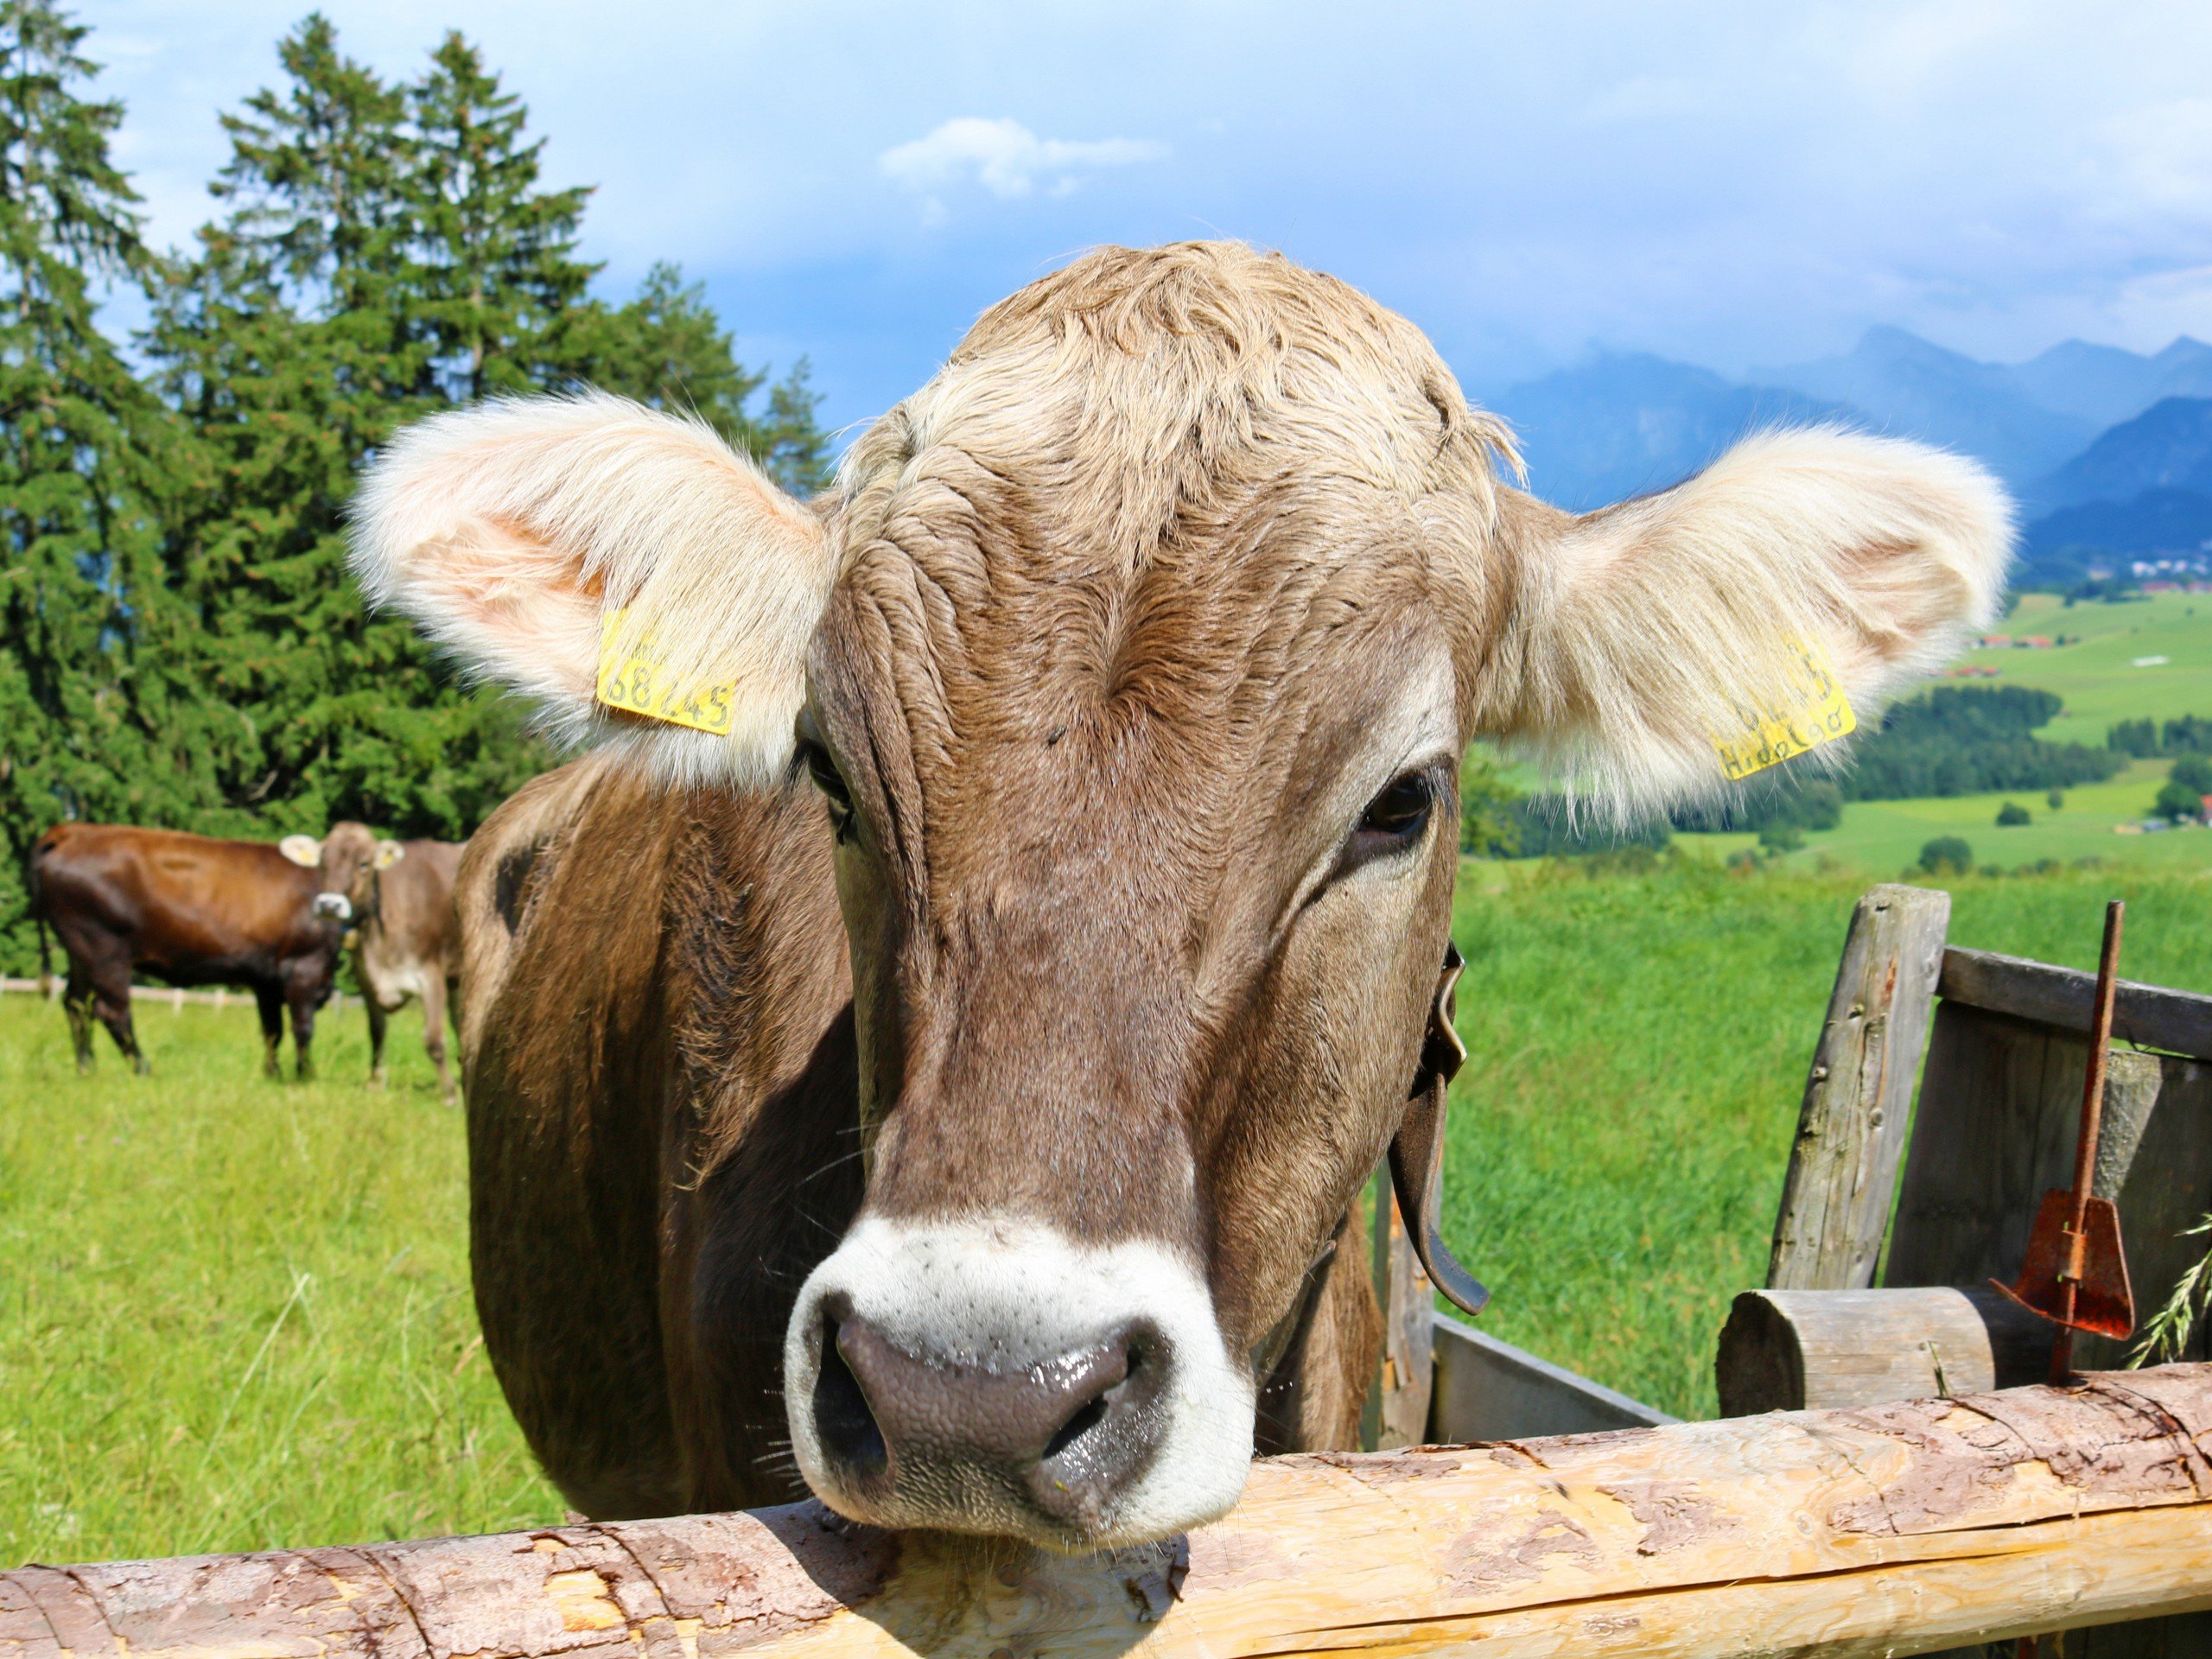 Cow met while biking the Chiemgau region